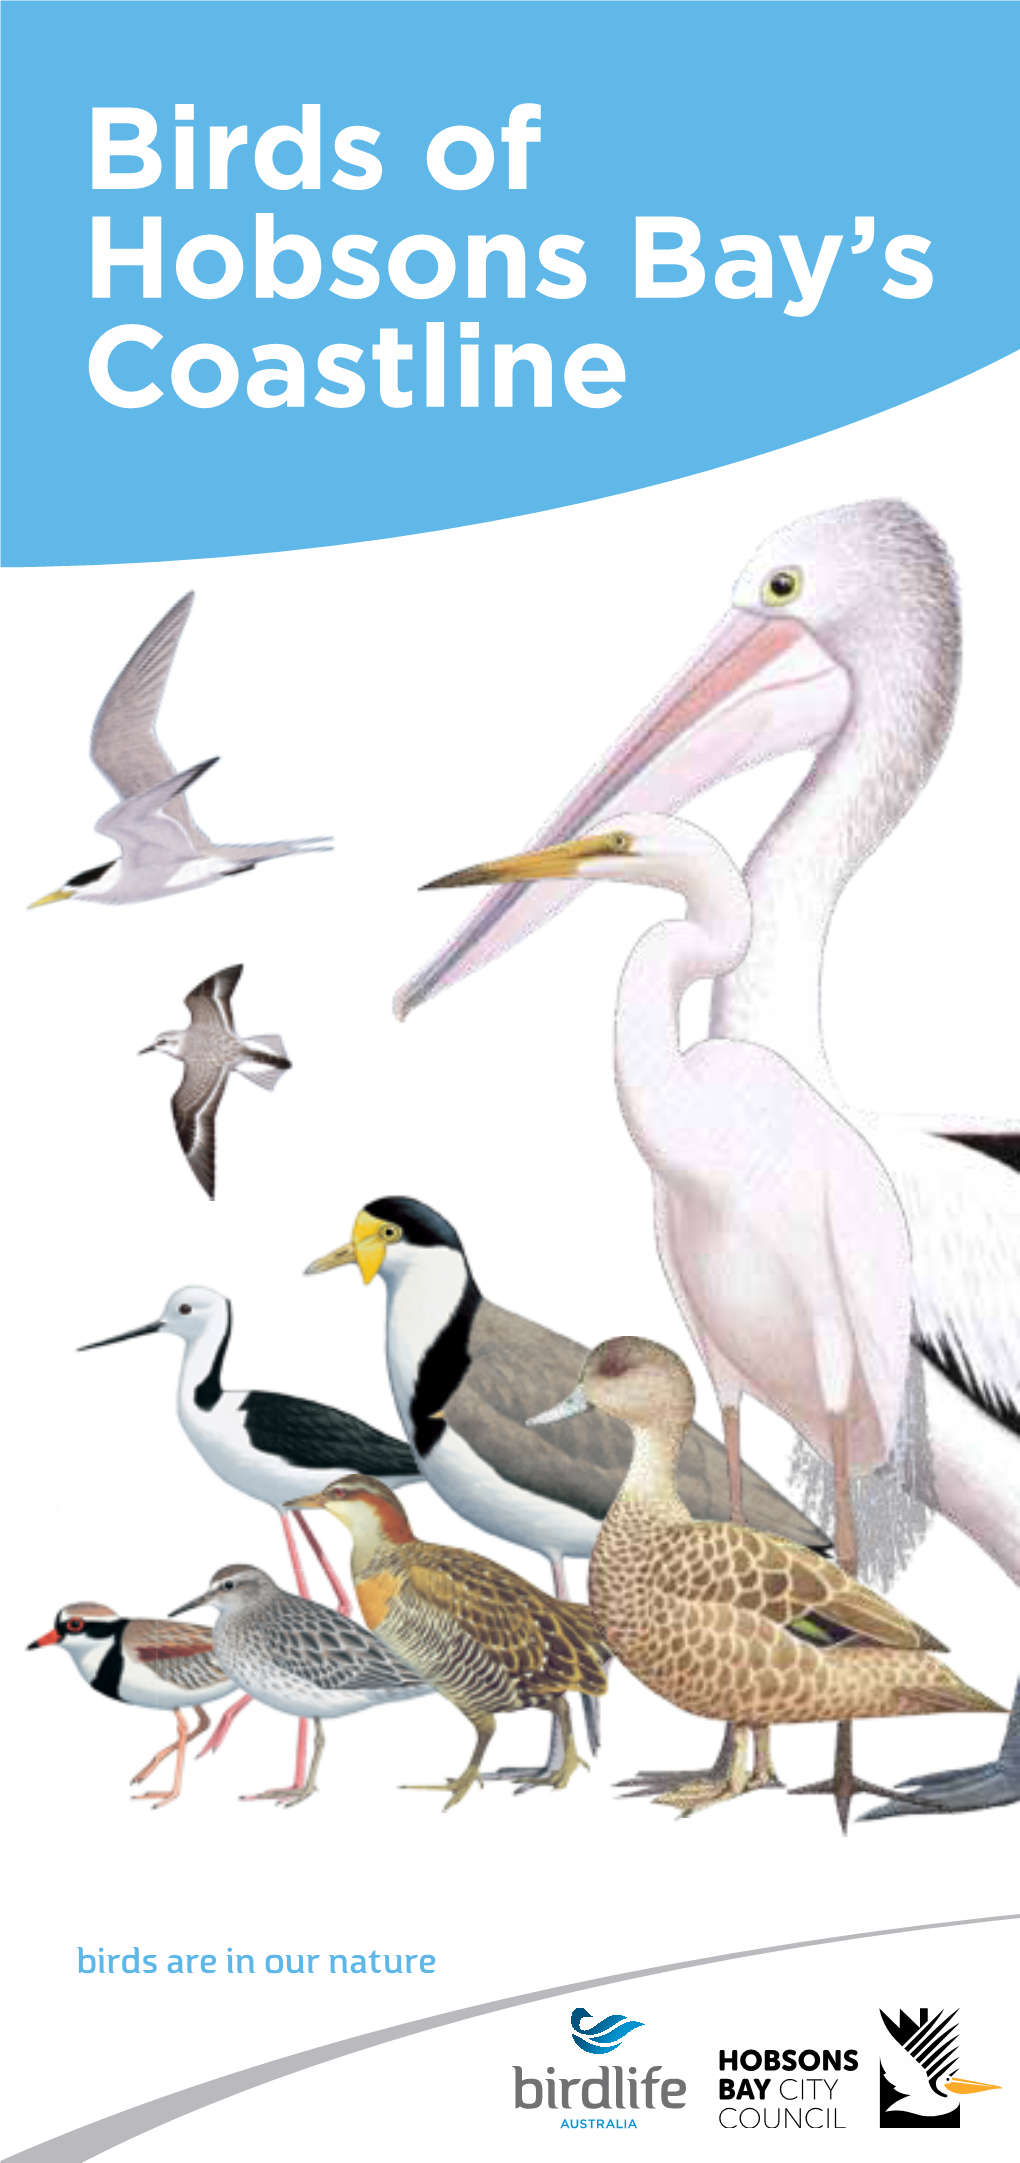 Birds of Hobsons Bay's Coastline